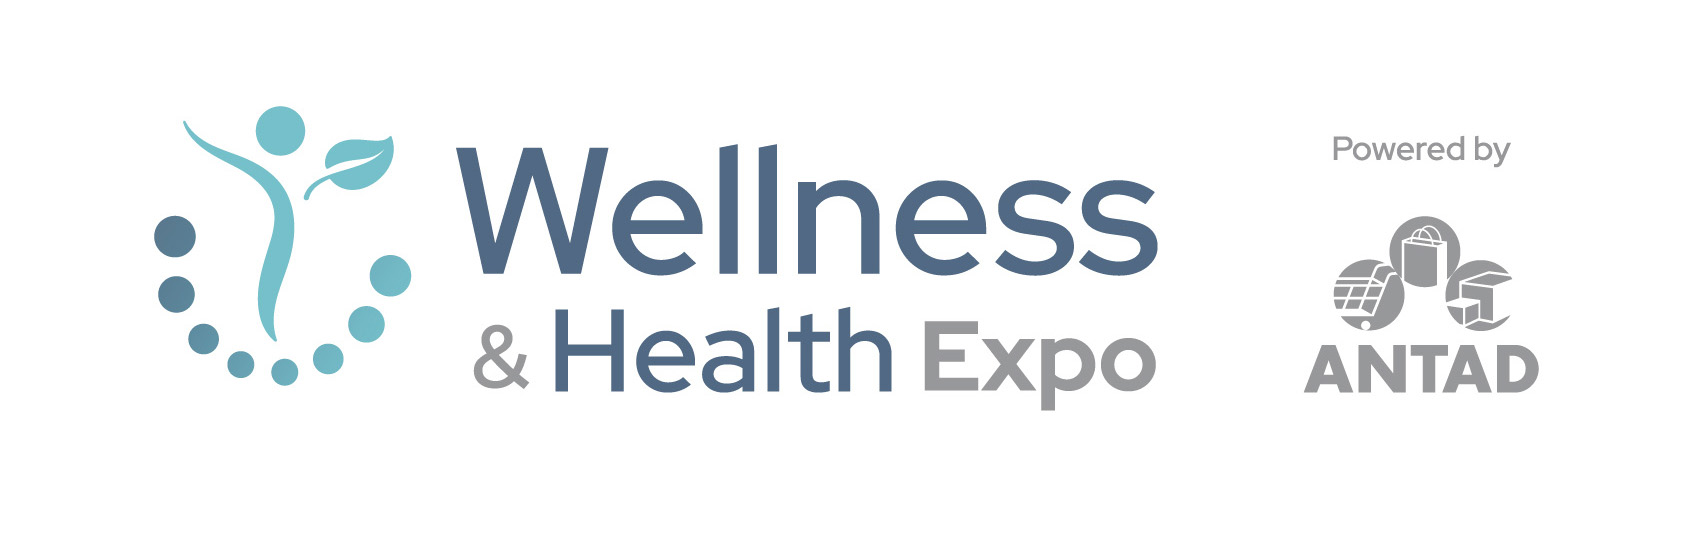 Health and wellness expo logo